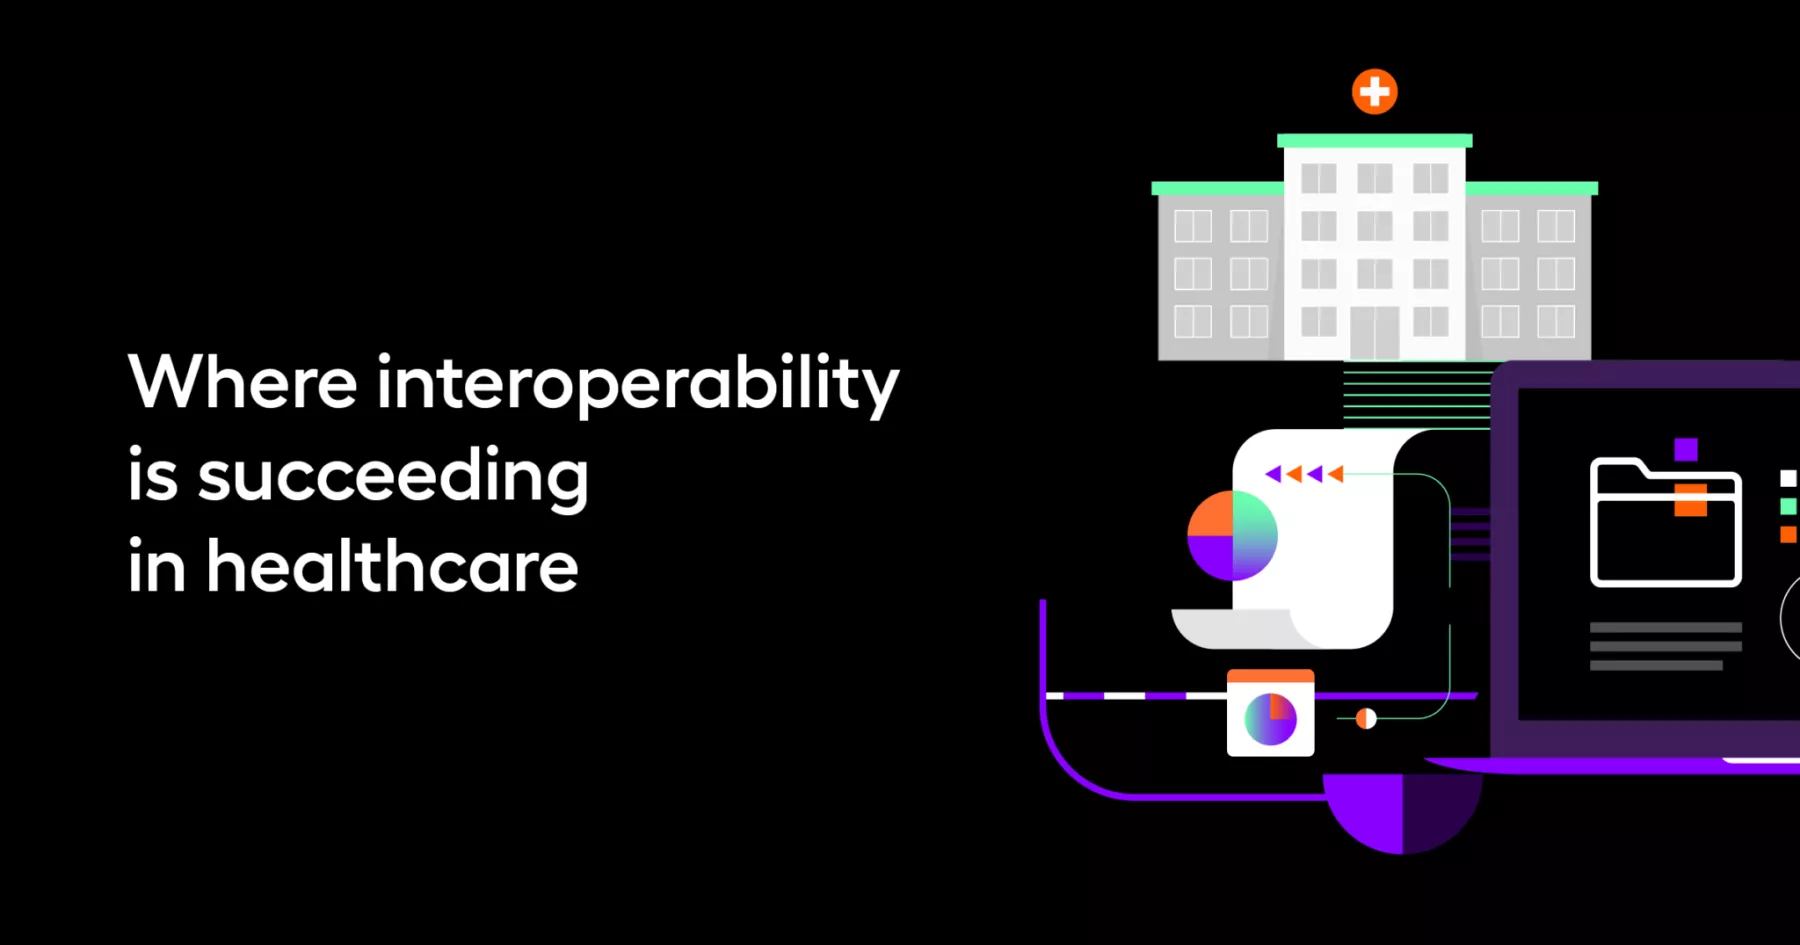 Where interoperability is succeeding in healthcare